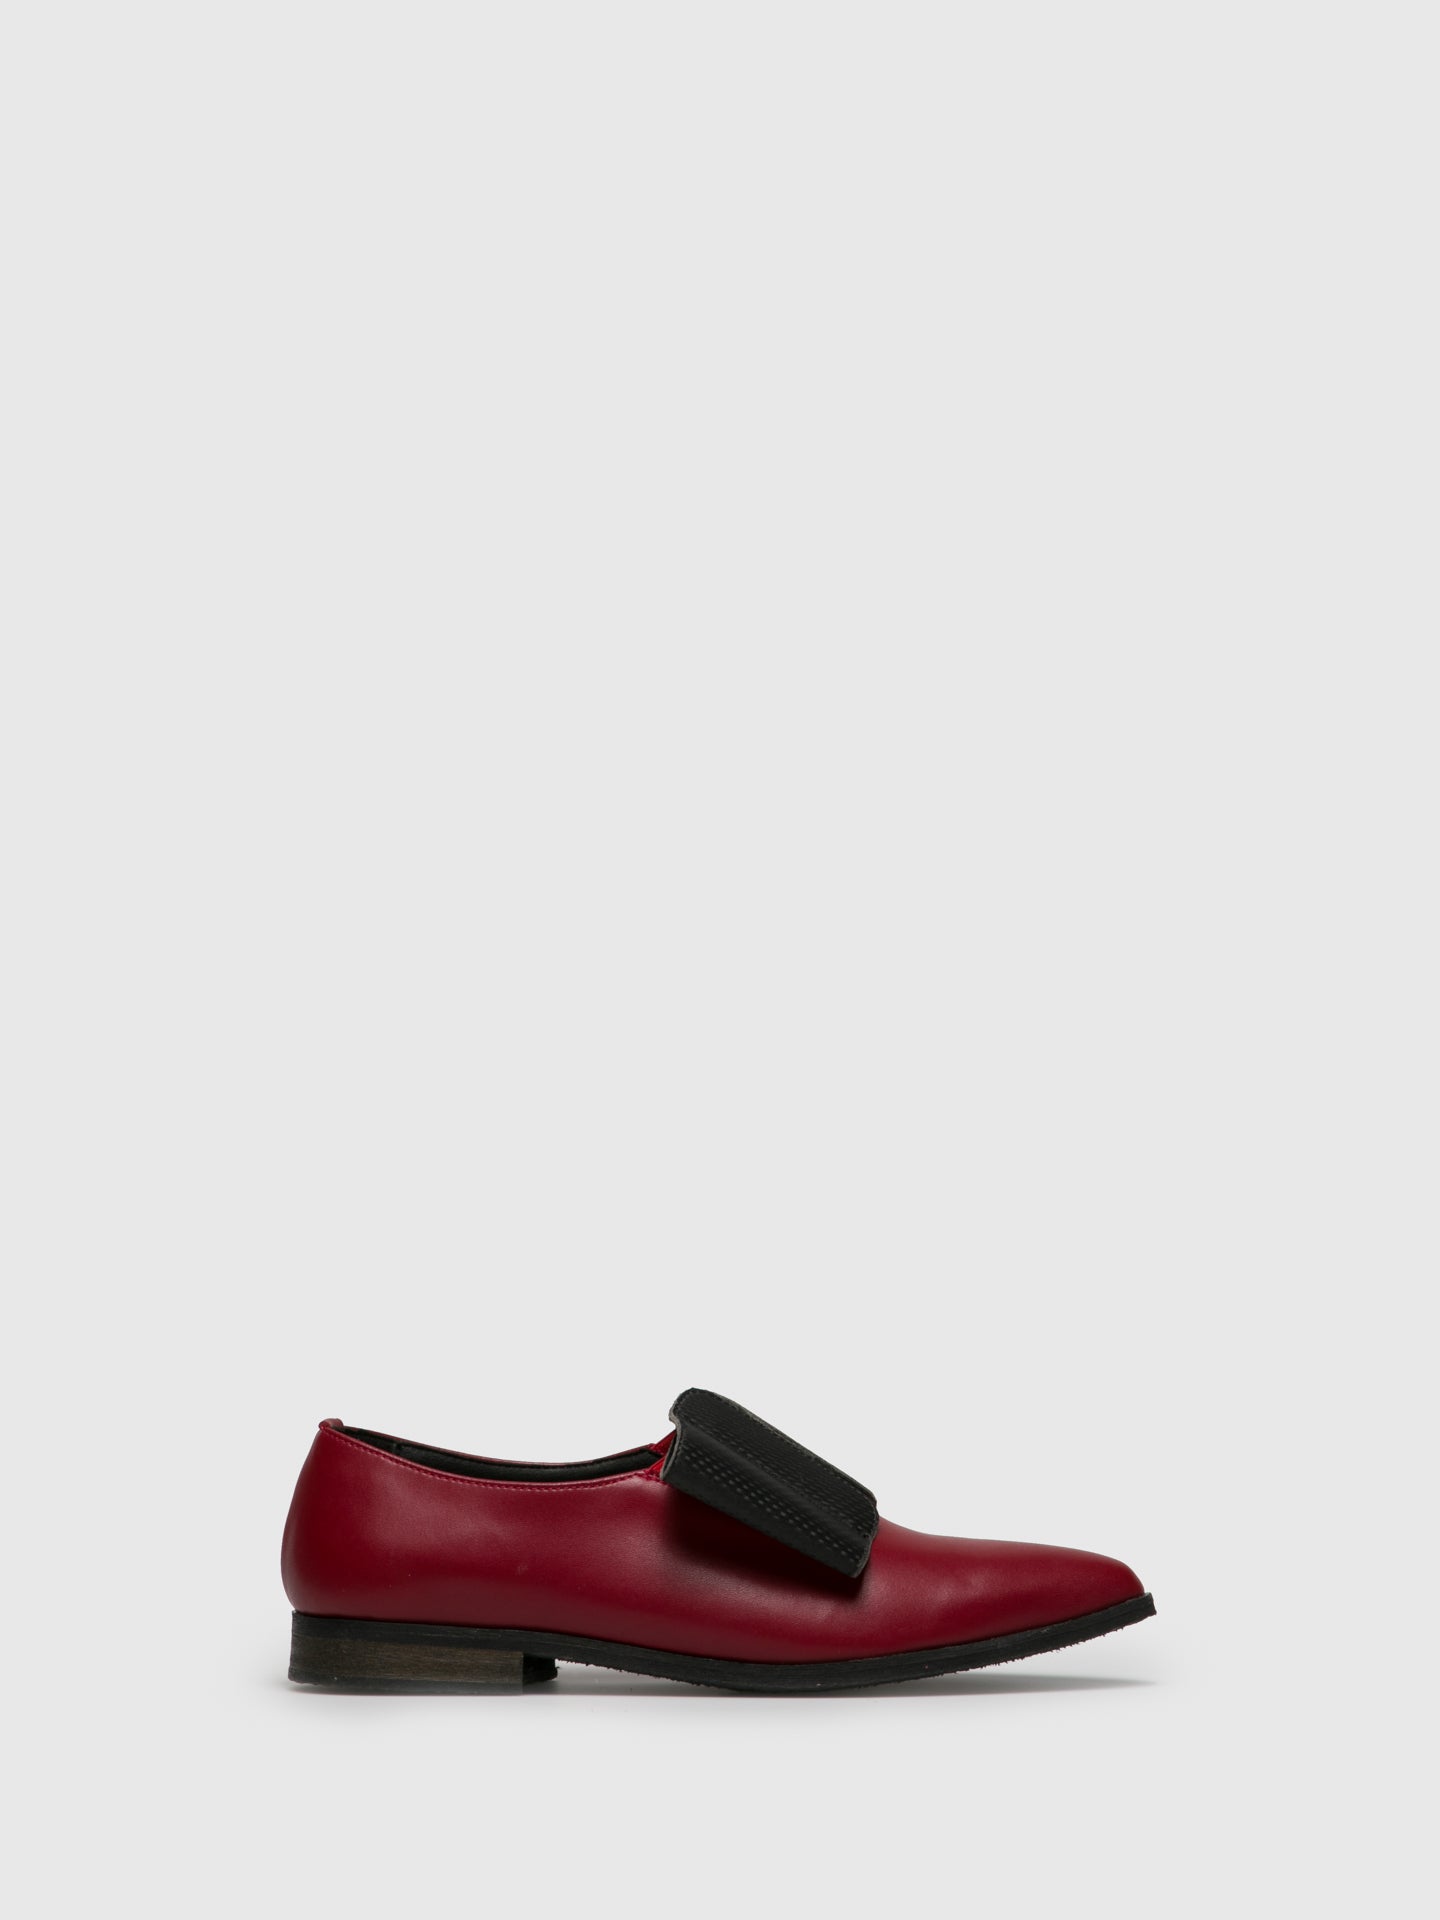 Marita Moreno Red Black Pointed Toe Shoes